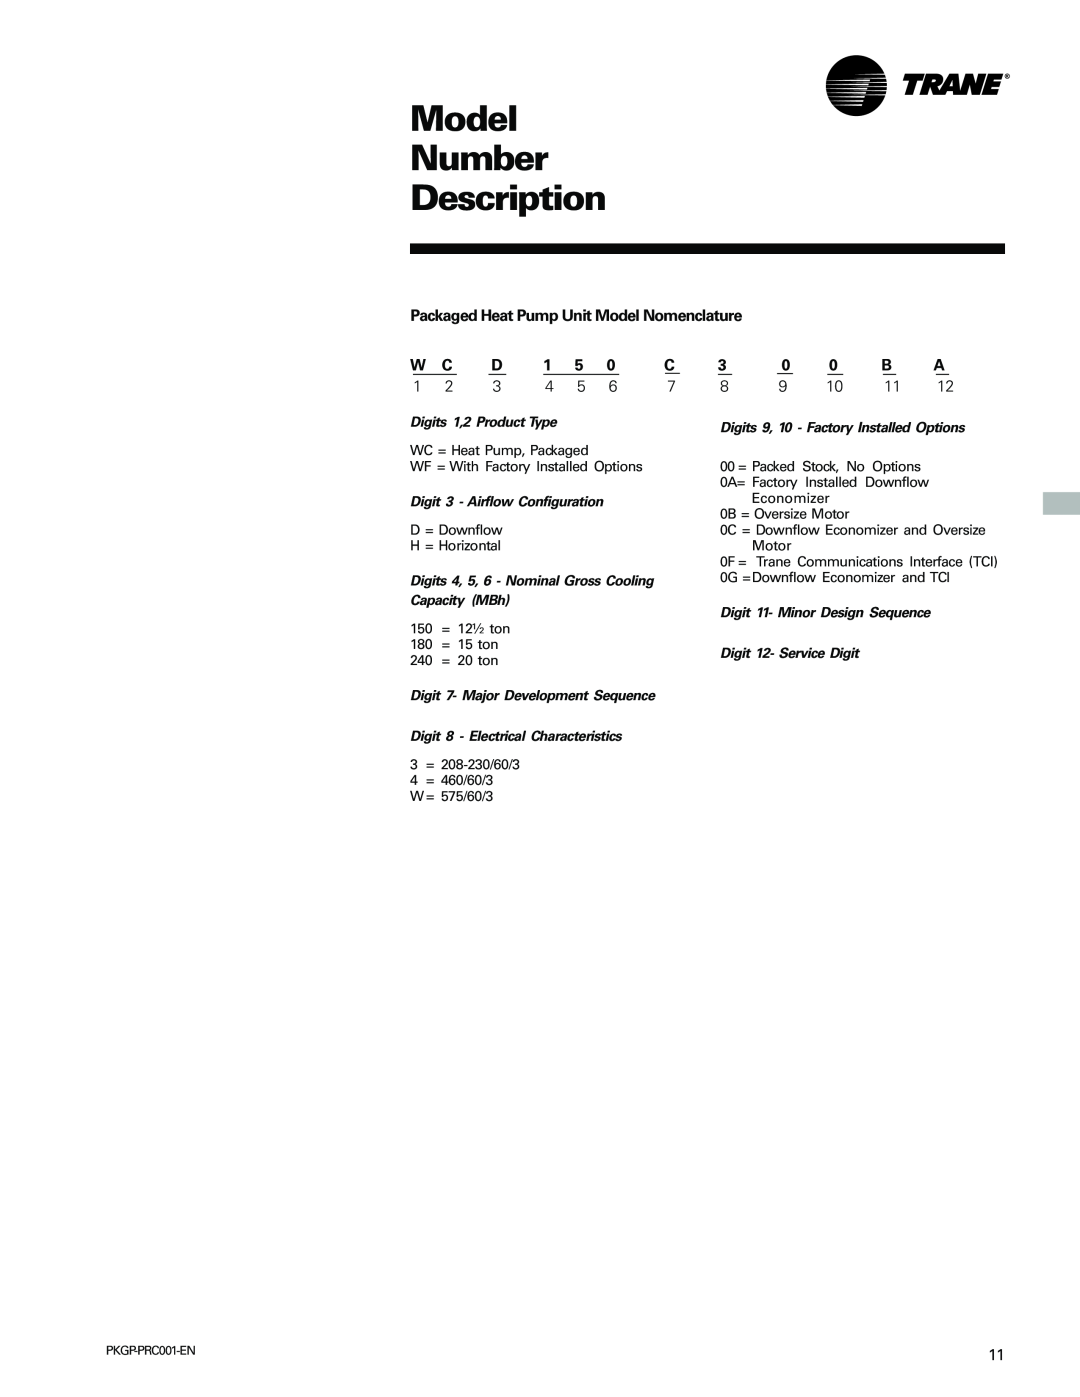 Trane PKGP-PRC001-EN manual Model Number Description 